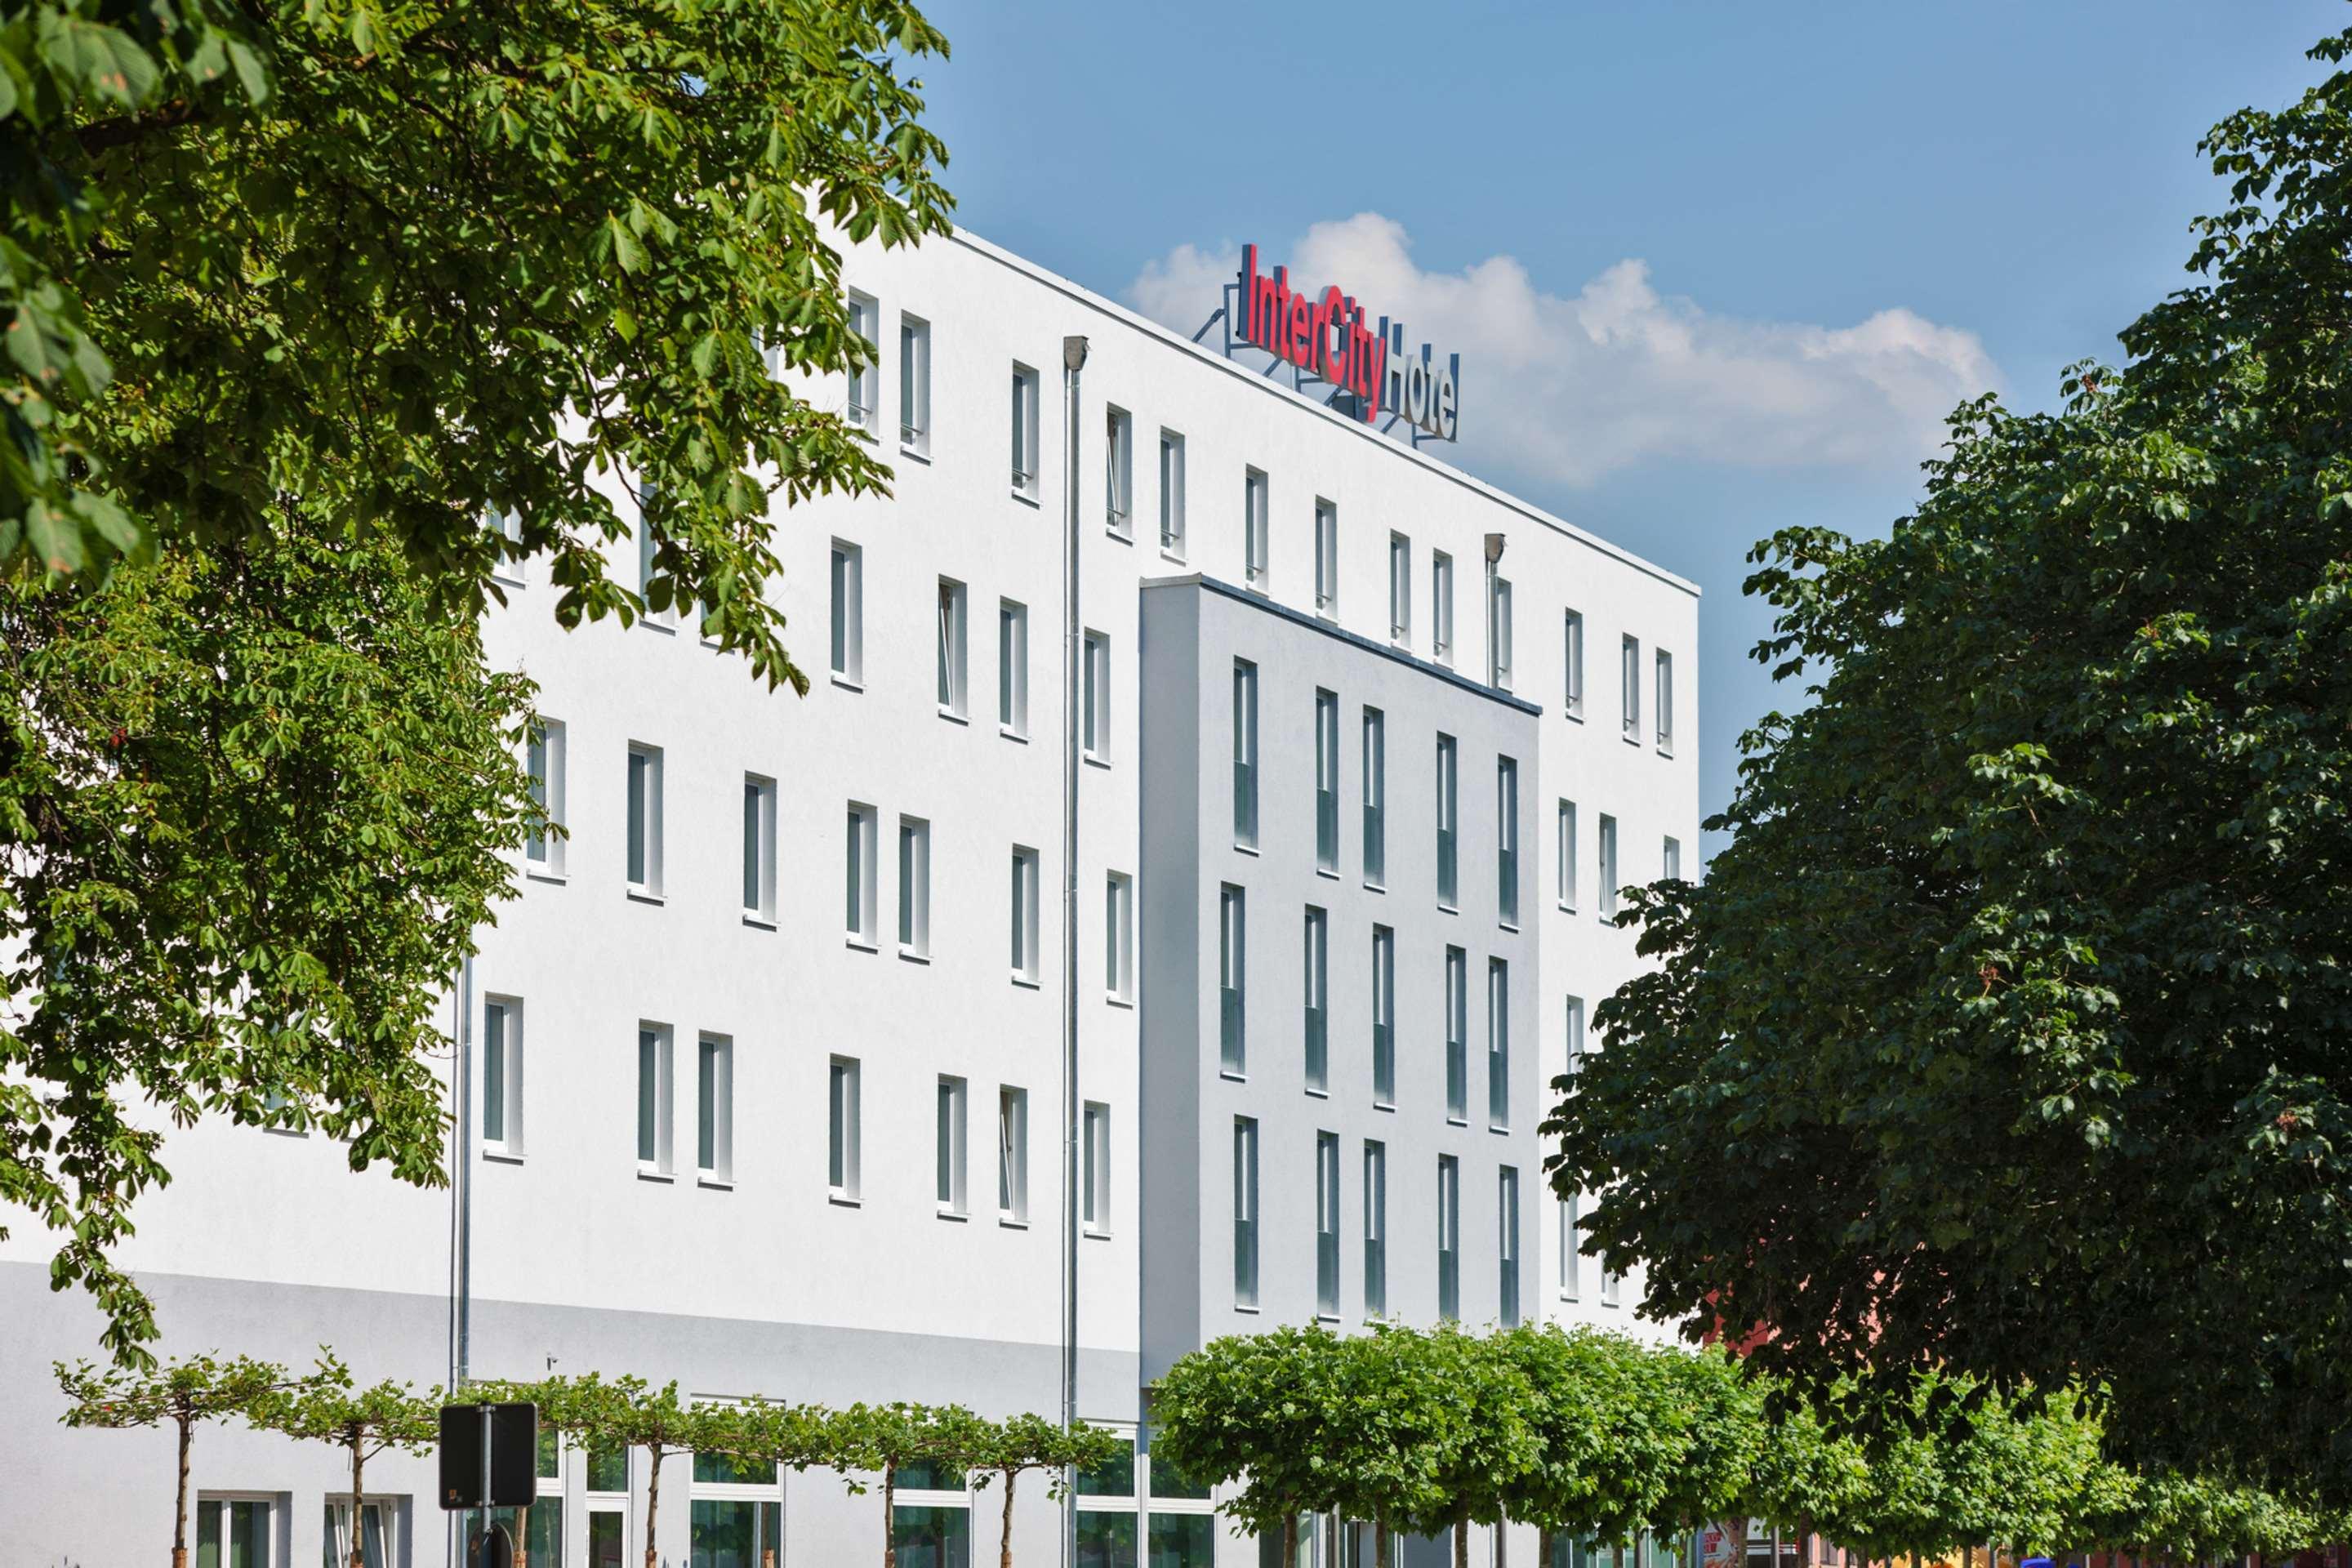 Hotels: 77 Cheap Ingolstadt Hotel Deals, Germany